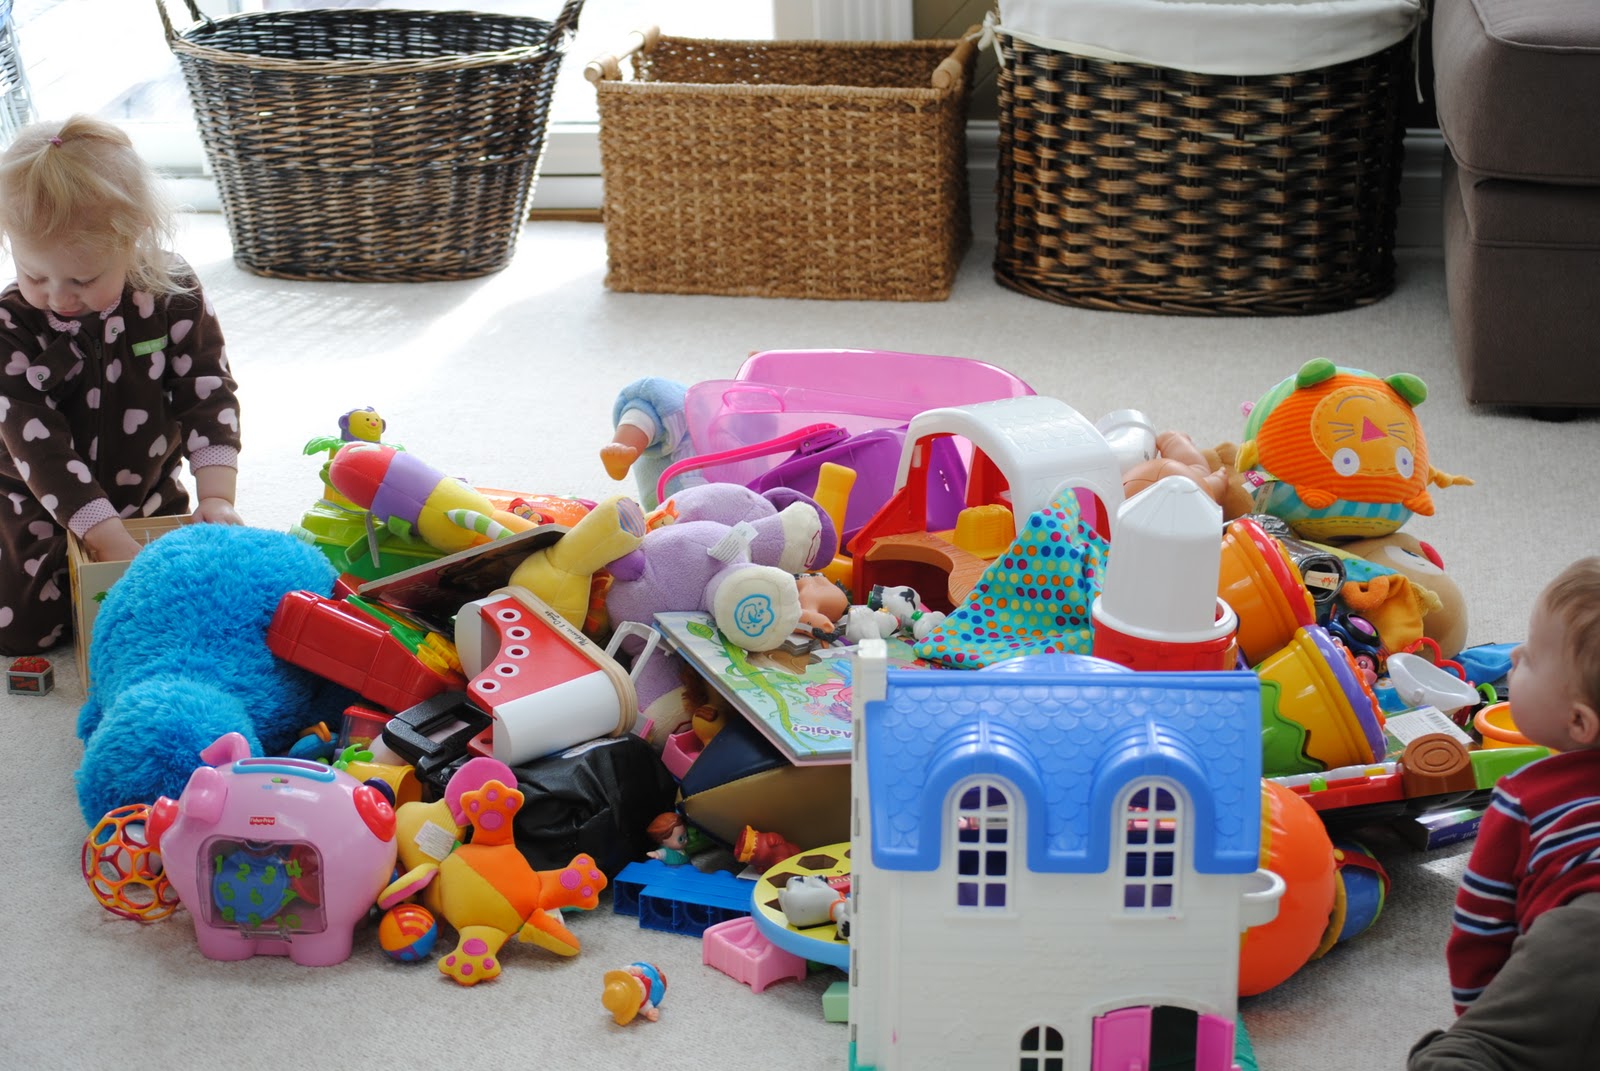 Картинки много игрушек. Детские игрушки. Разные игрушки для детей. Много игрушек для детей. Игрушки для детского сада.